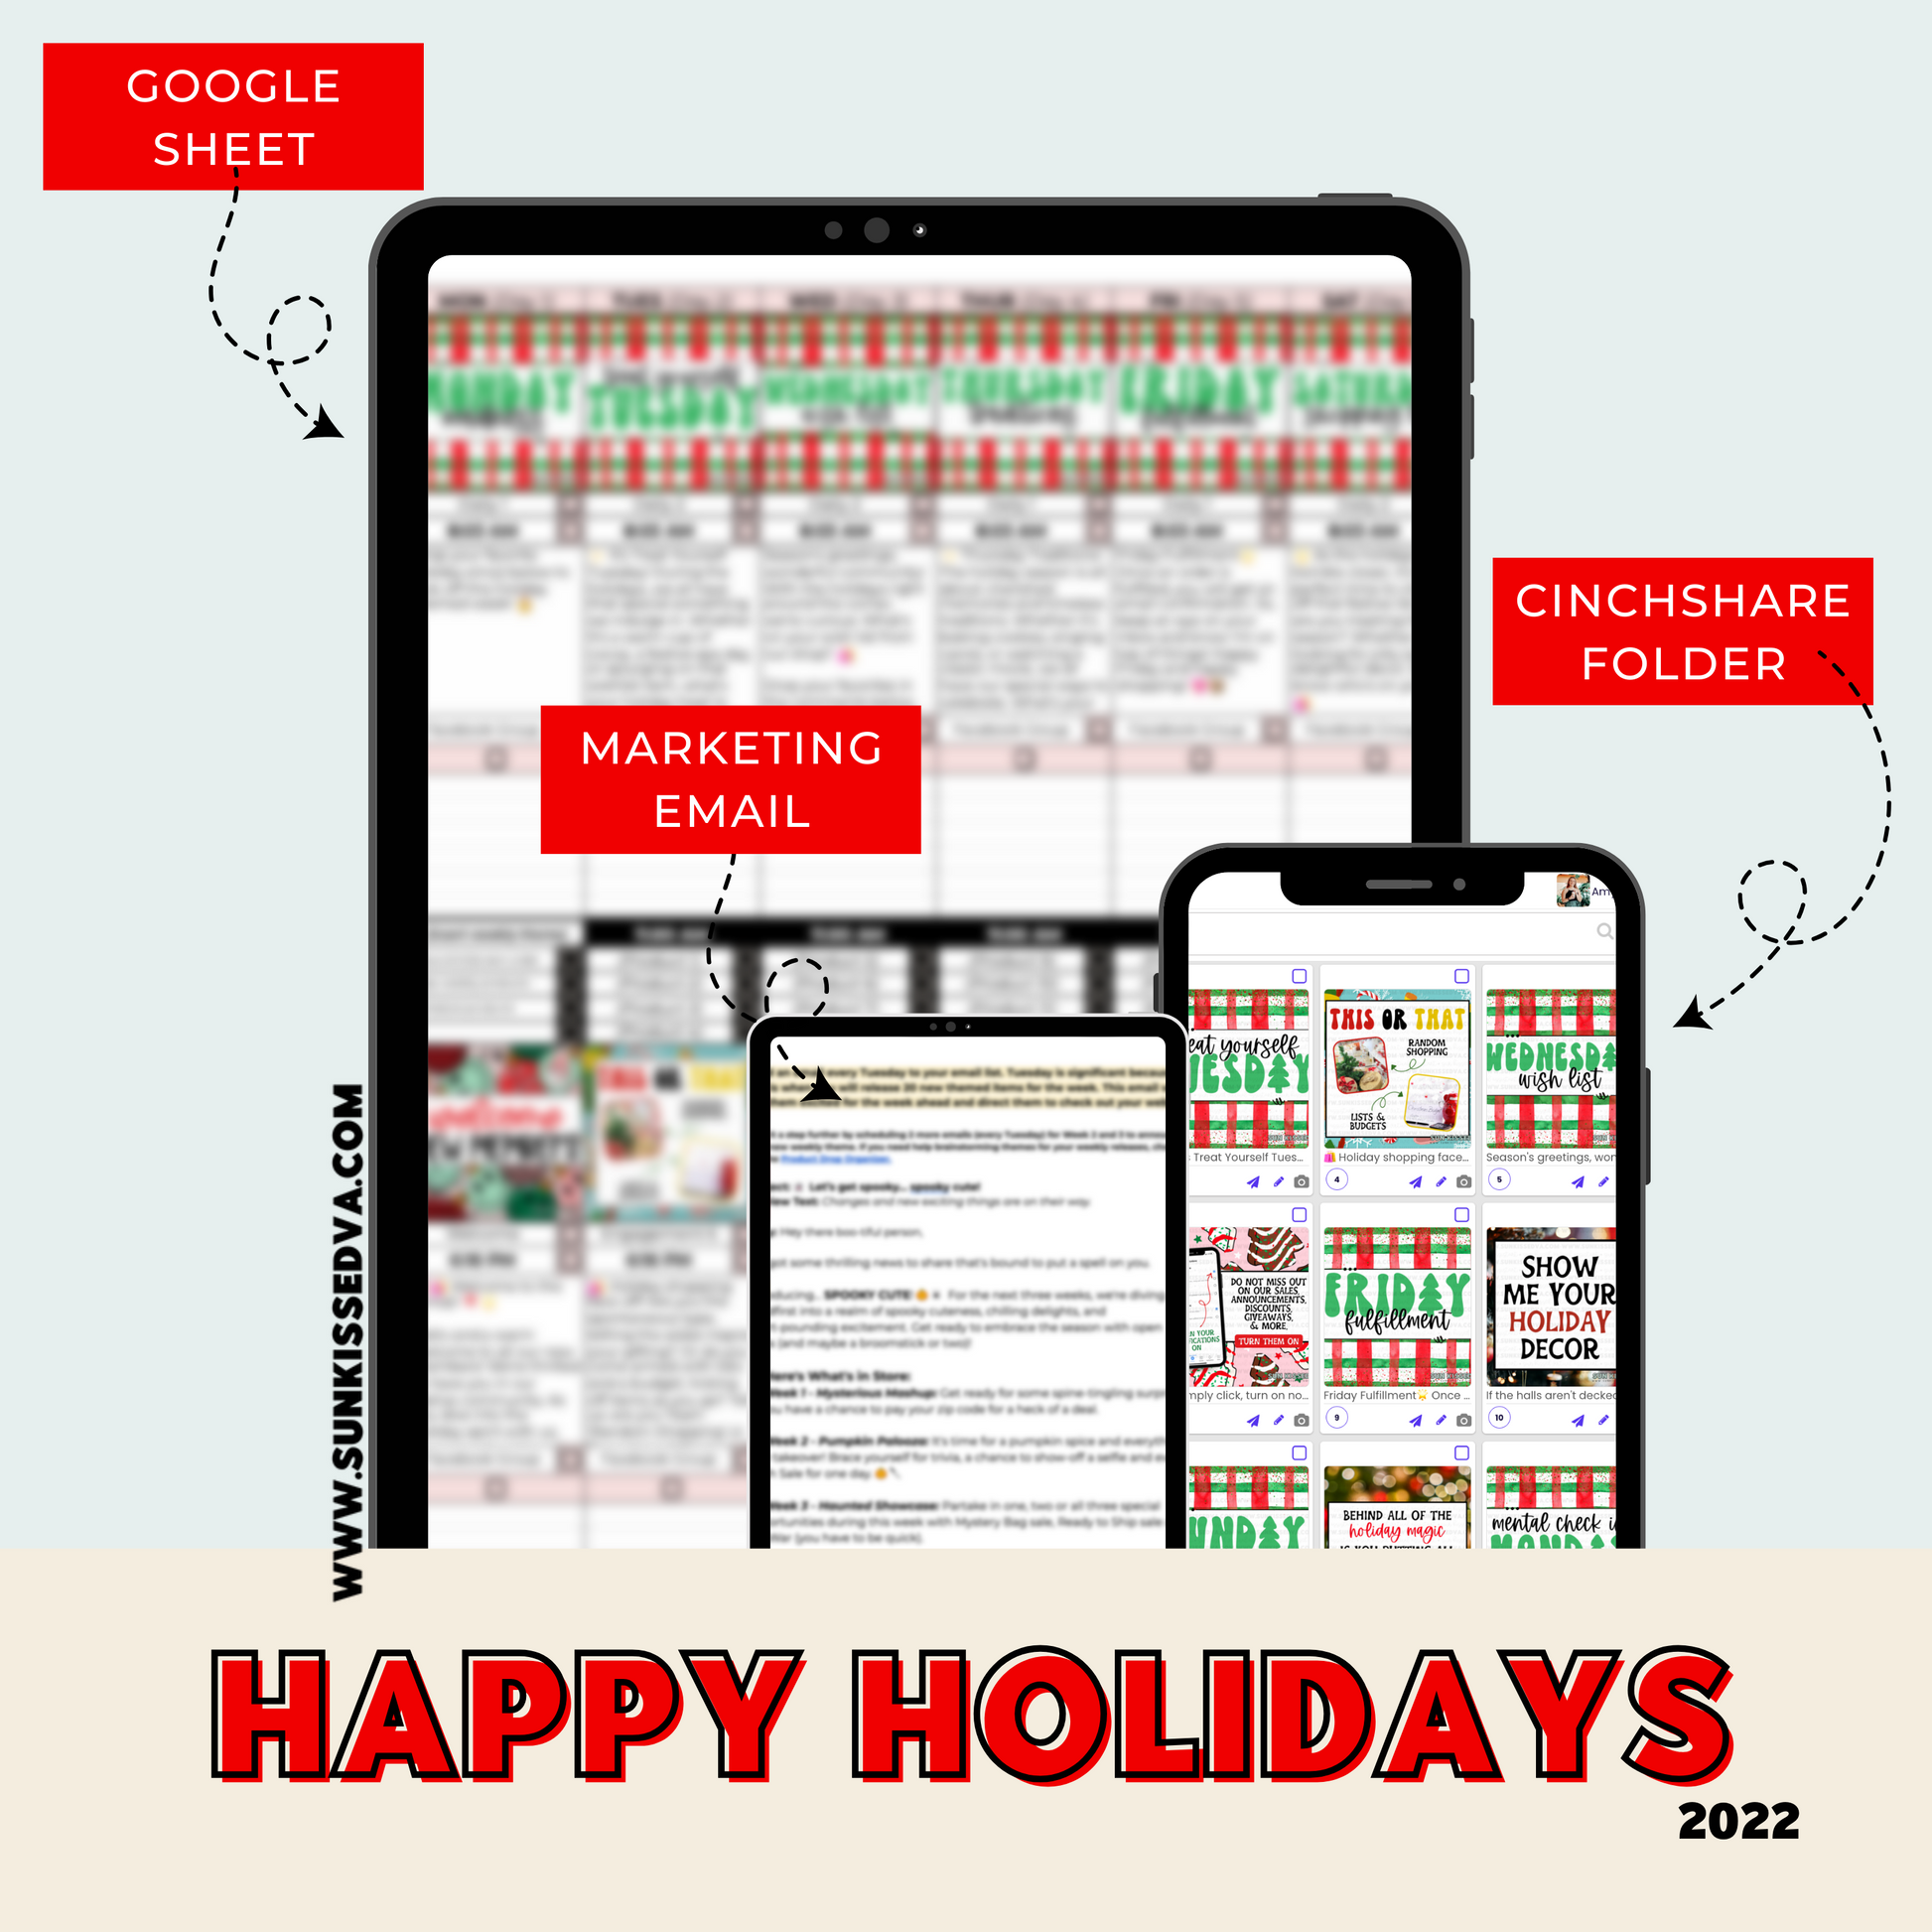 Happy Holidays Content Calendar themed social media plan | Sun Kissed Virtual Assistant